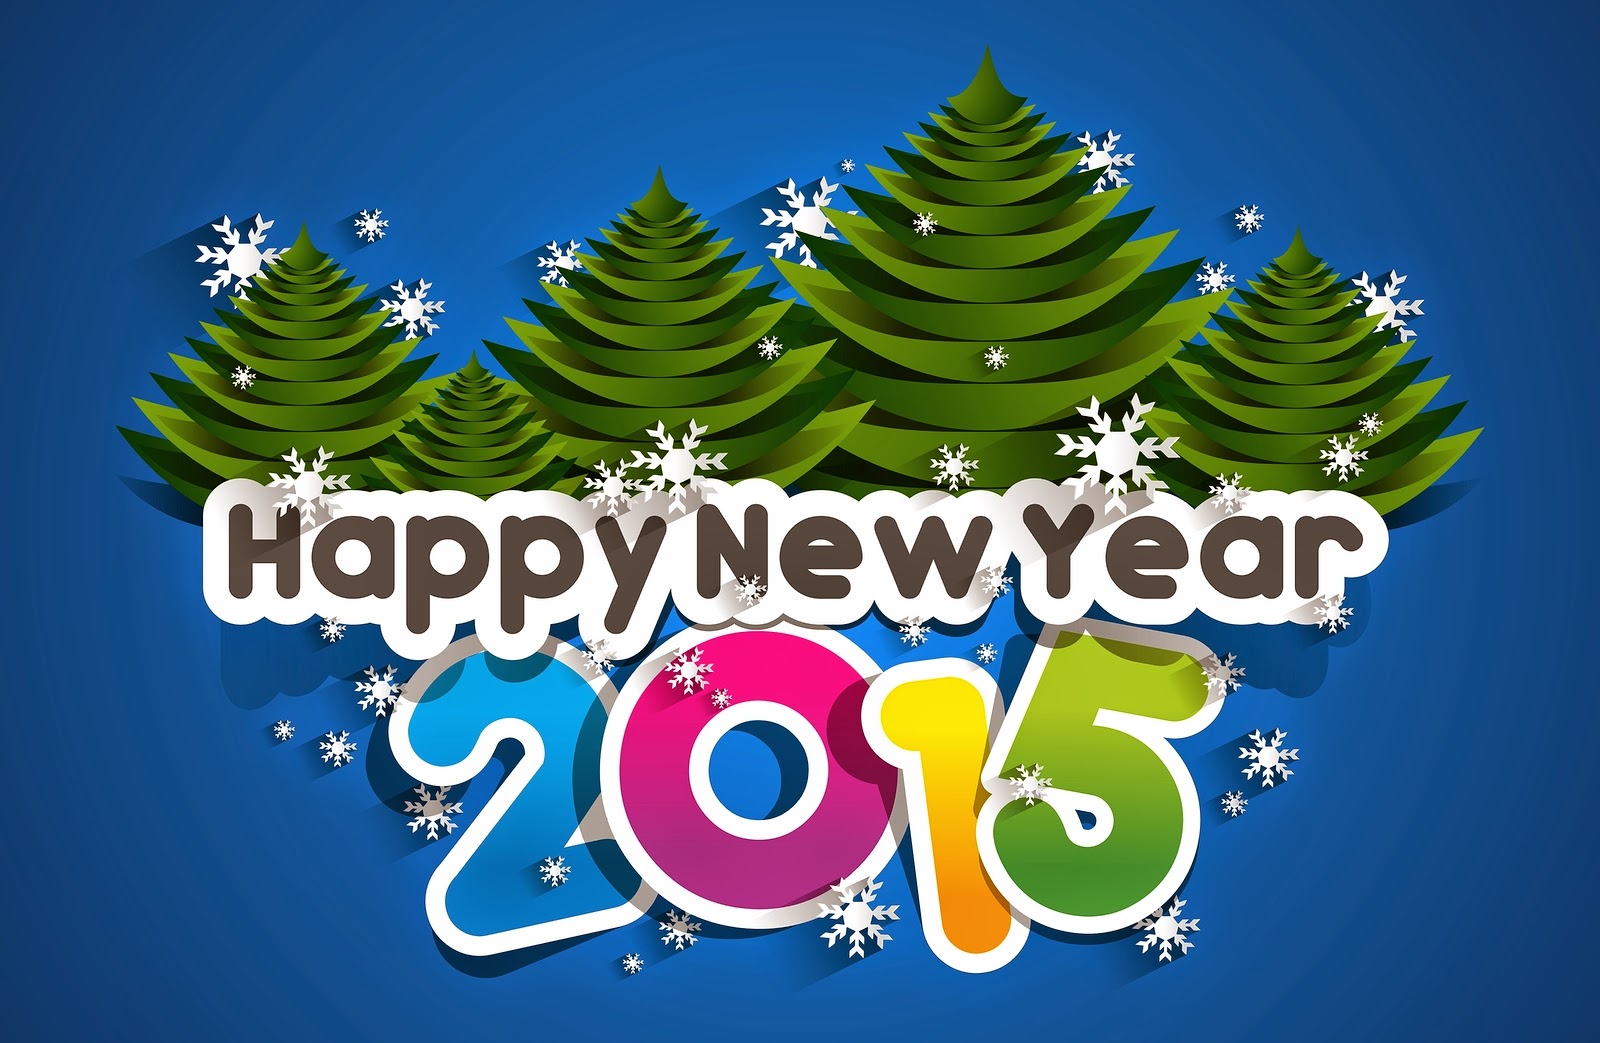 More information about "Συναδελφικές ευχές για το νέο έτος"